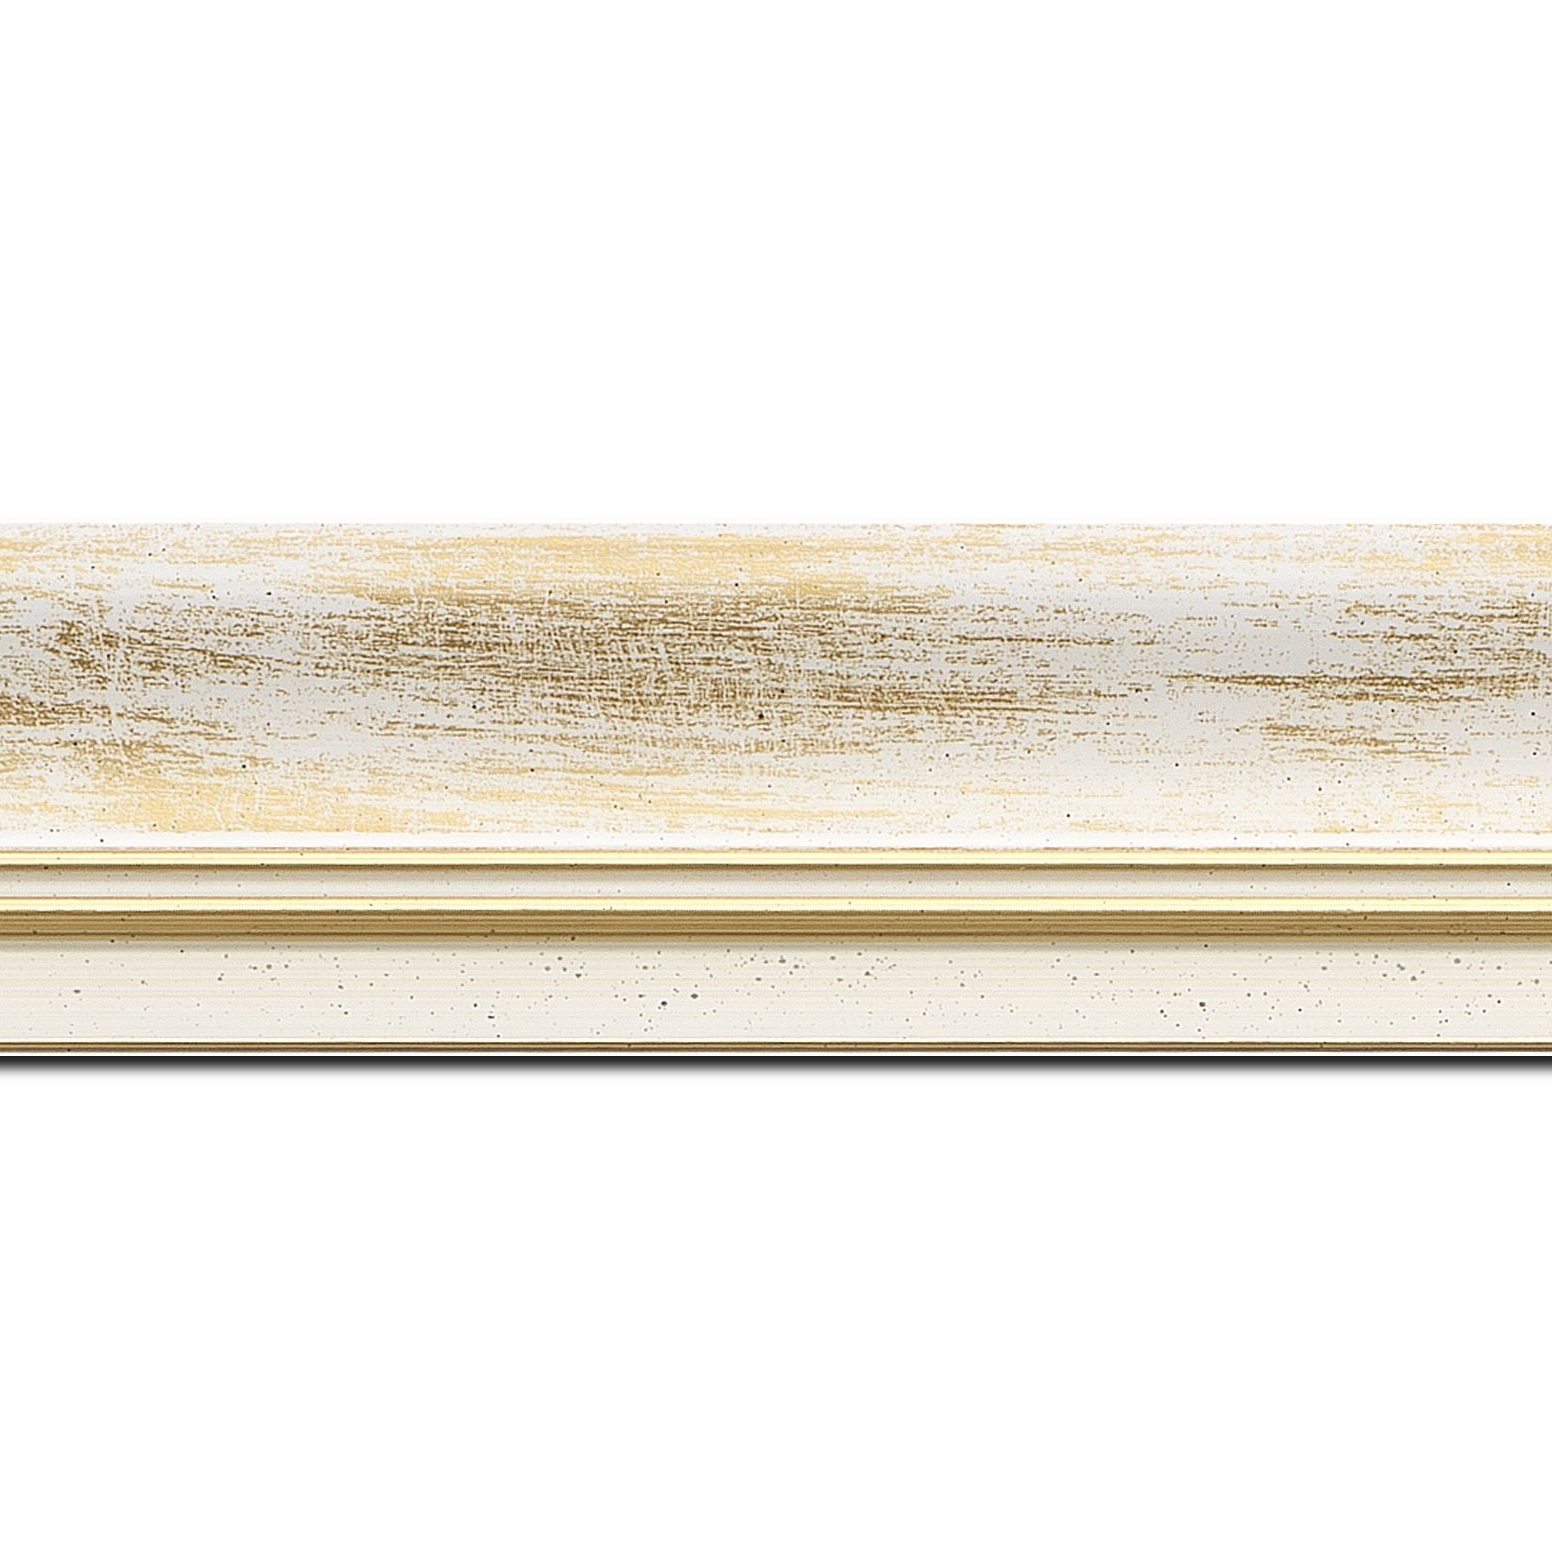 Cadre  bois blanc — 29.7 x 42